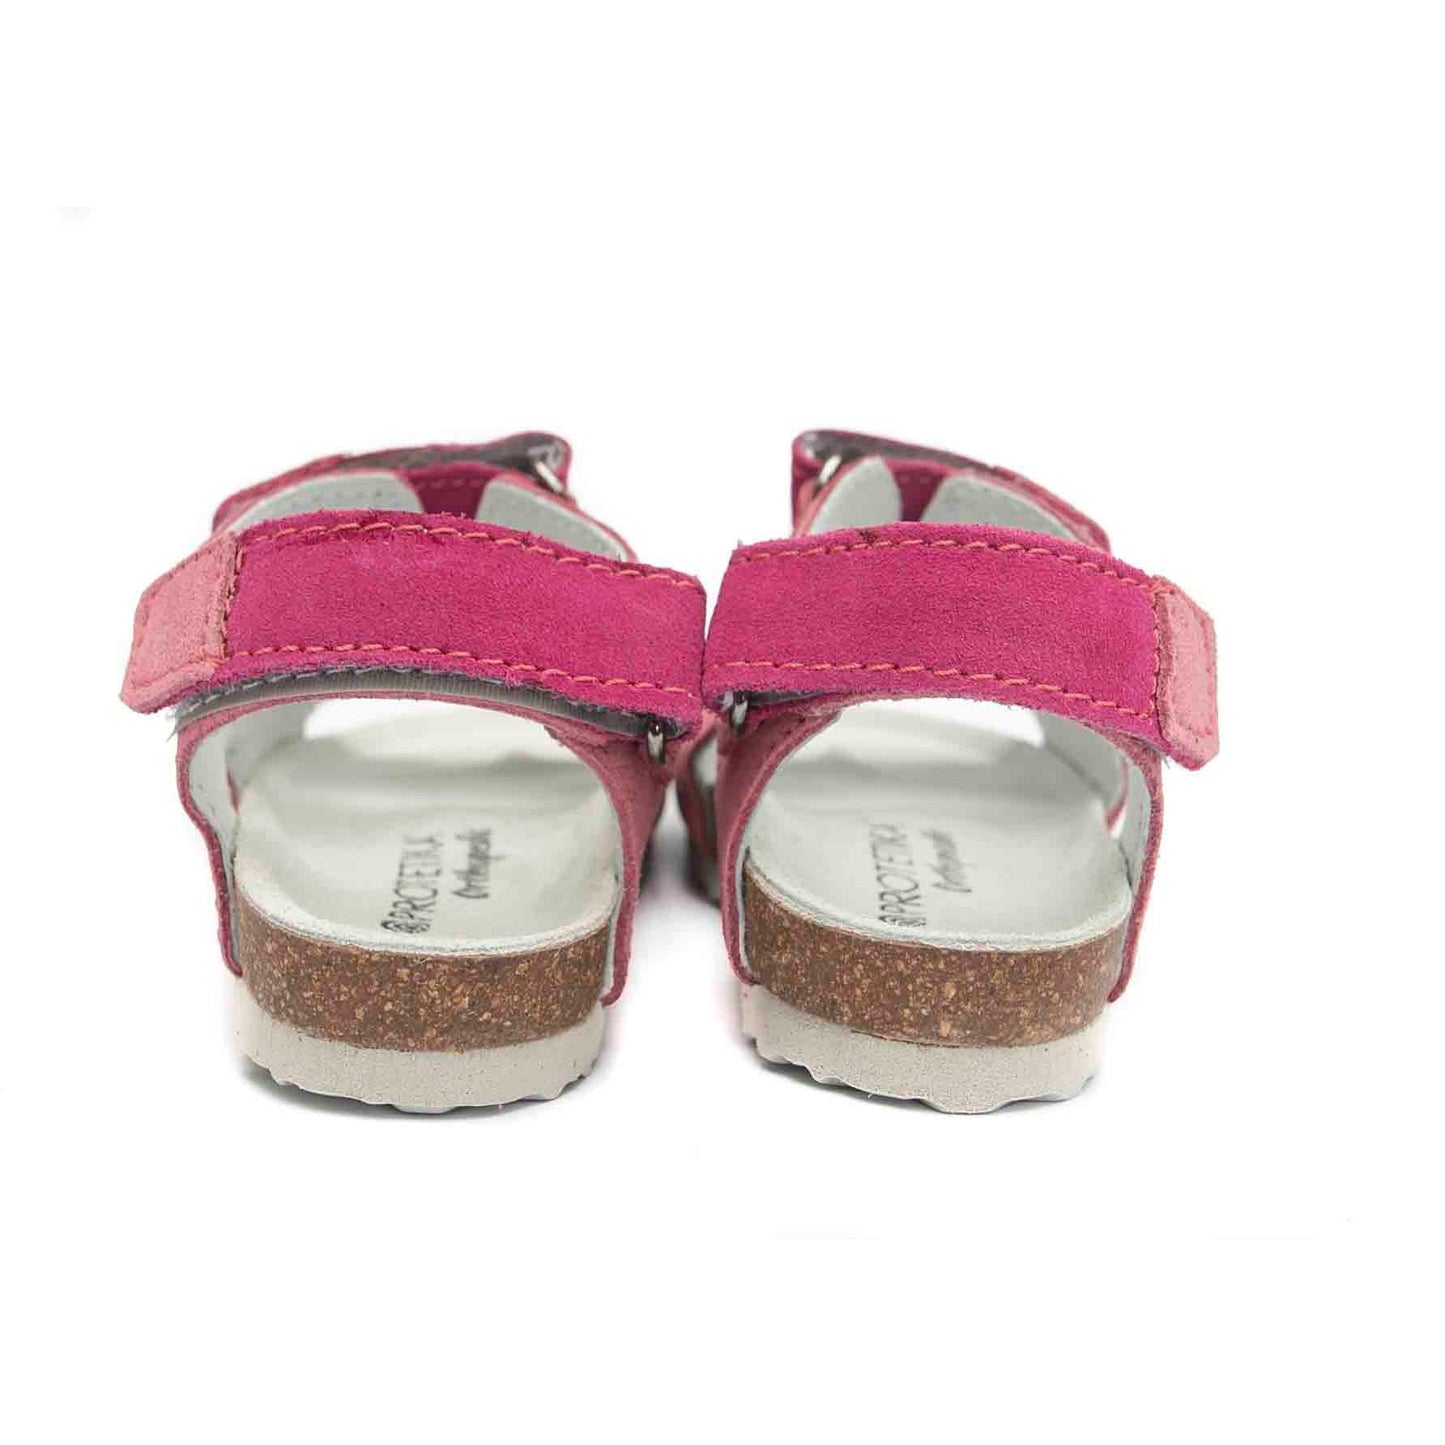 orthopedic older girls sandals  with open heel: T27: color pink